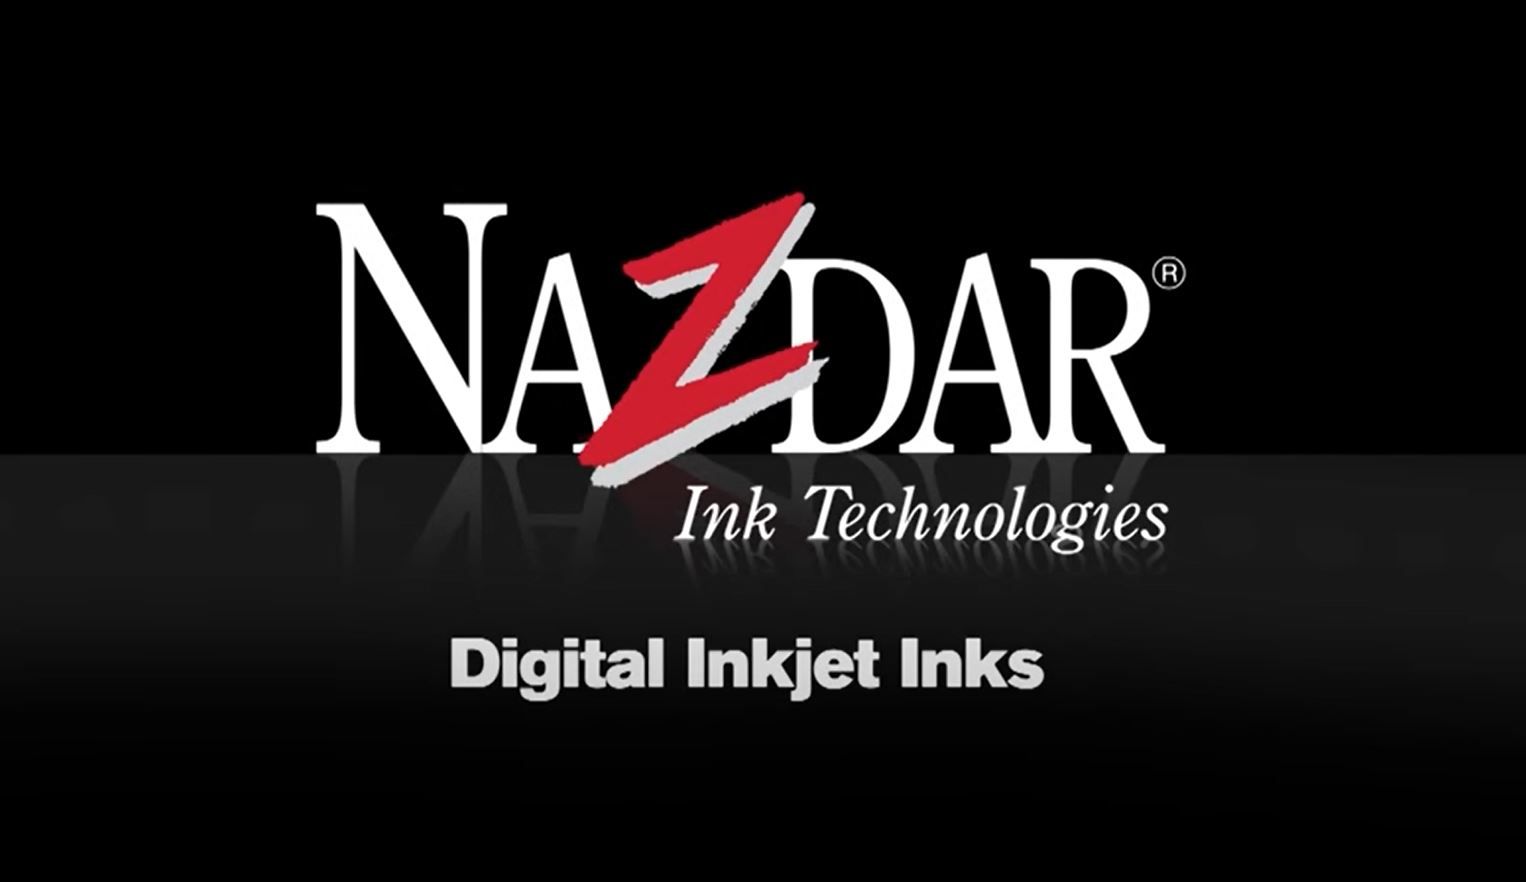 Nazdar Ink Technologies - Digital Inkjet Inks overview video